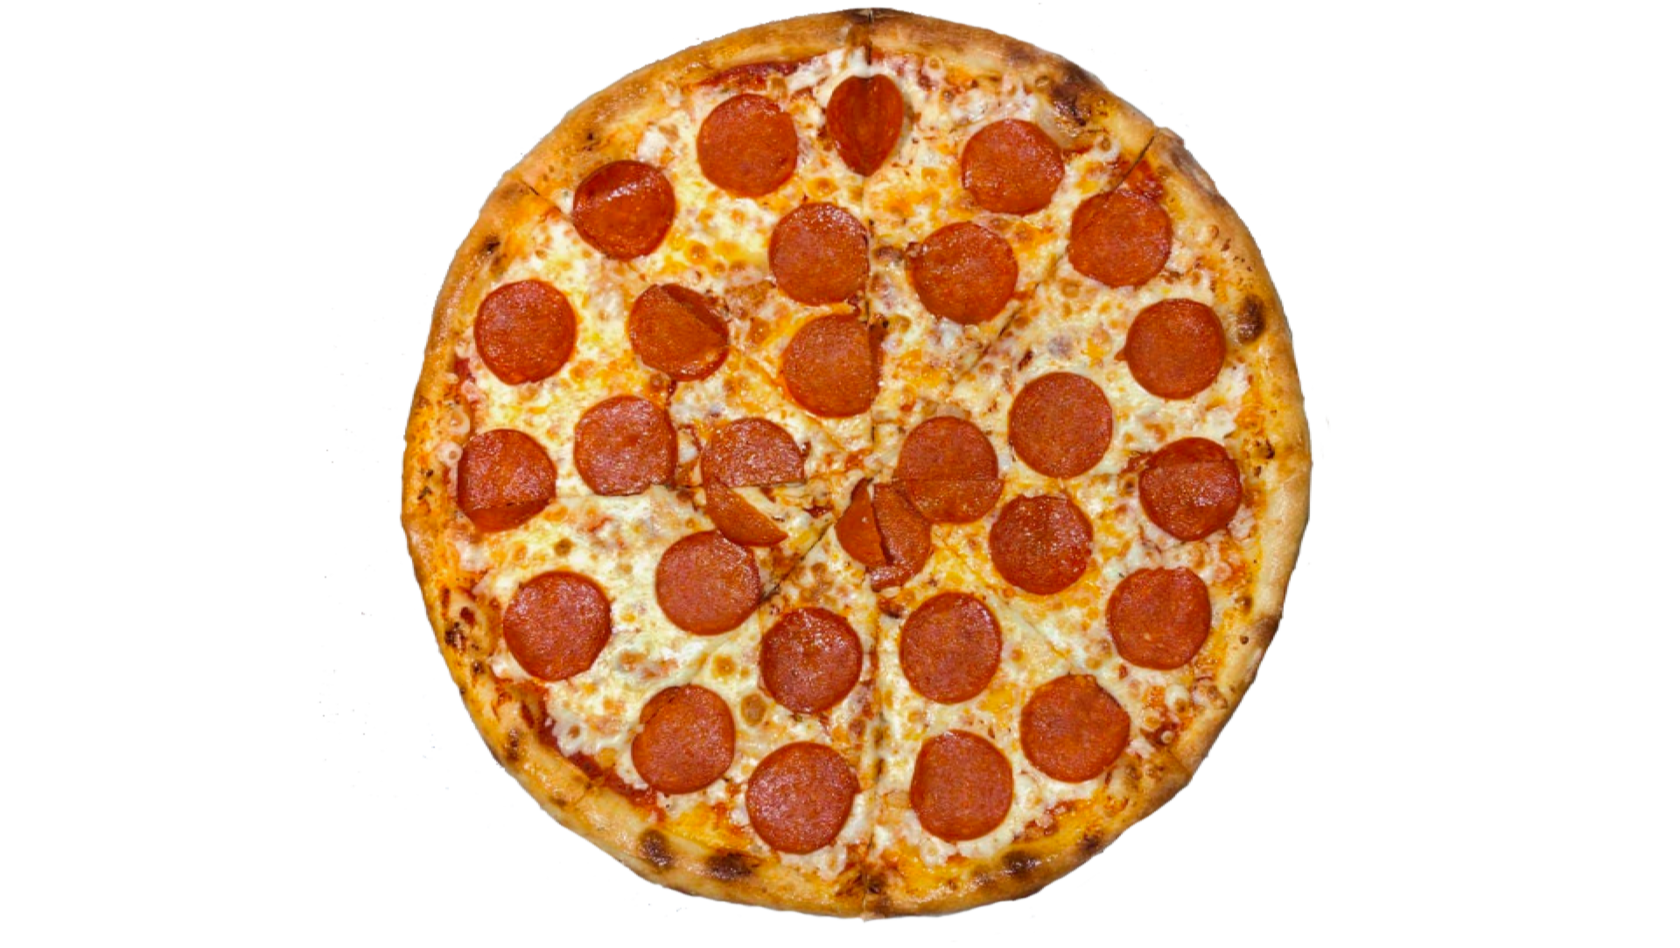 сколько стоит пицца пепперони в новосибирске фото 91